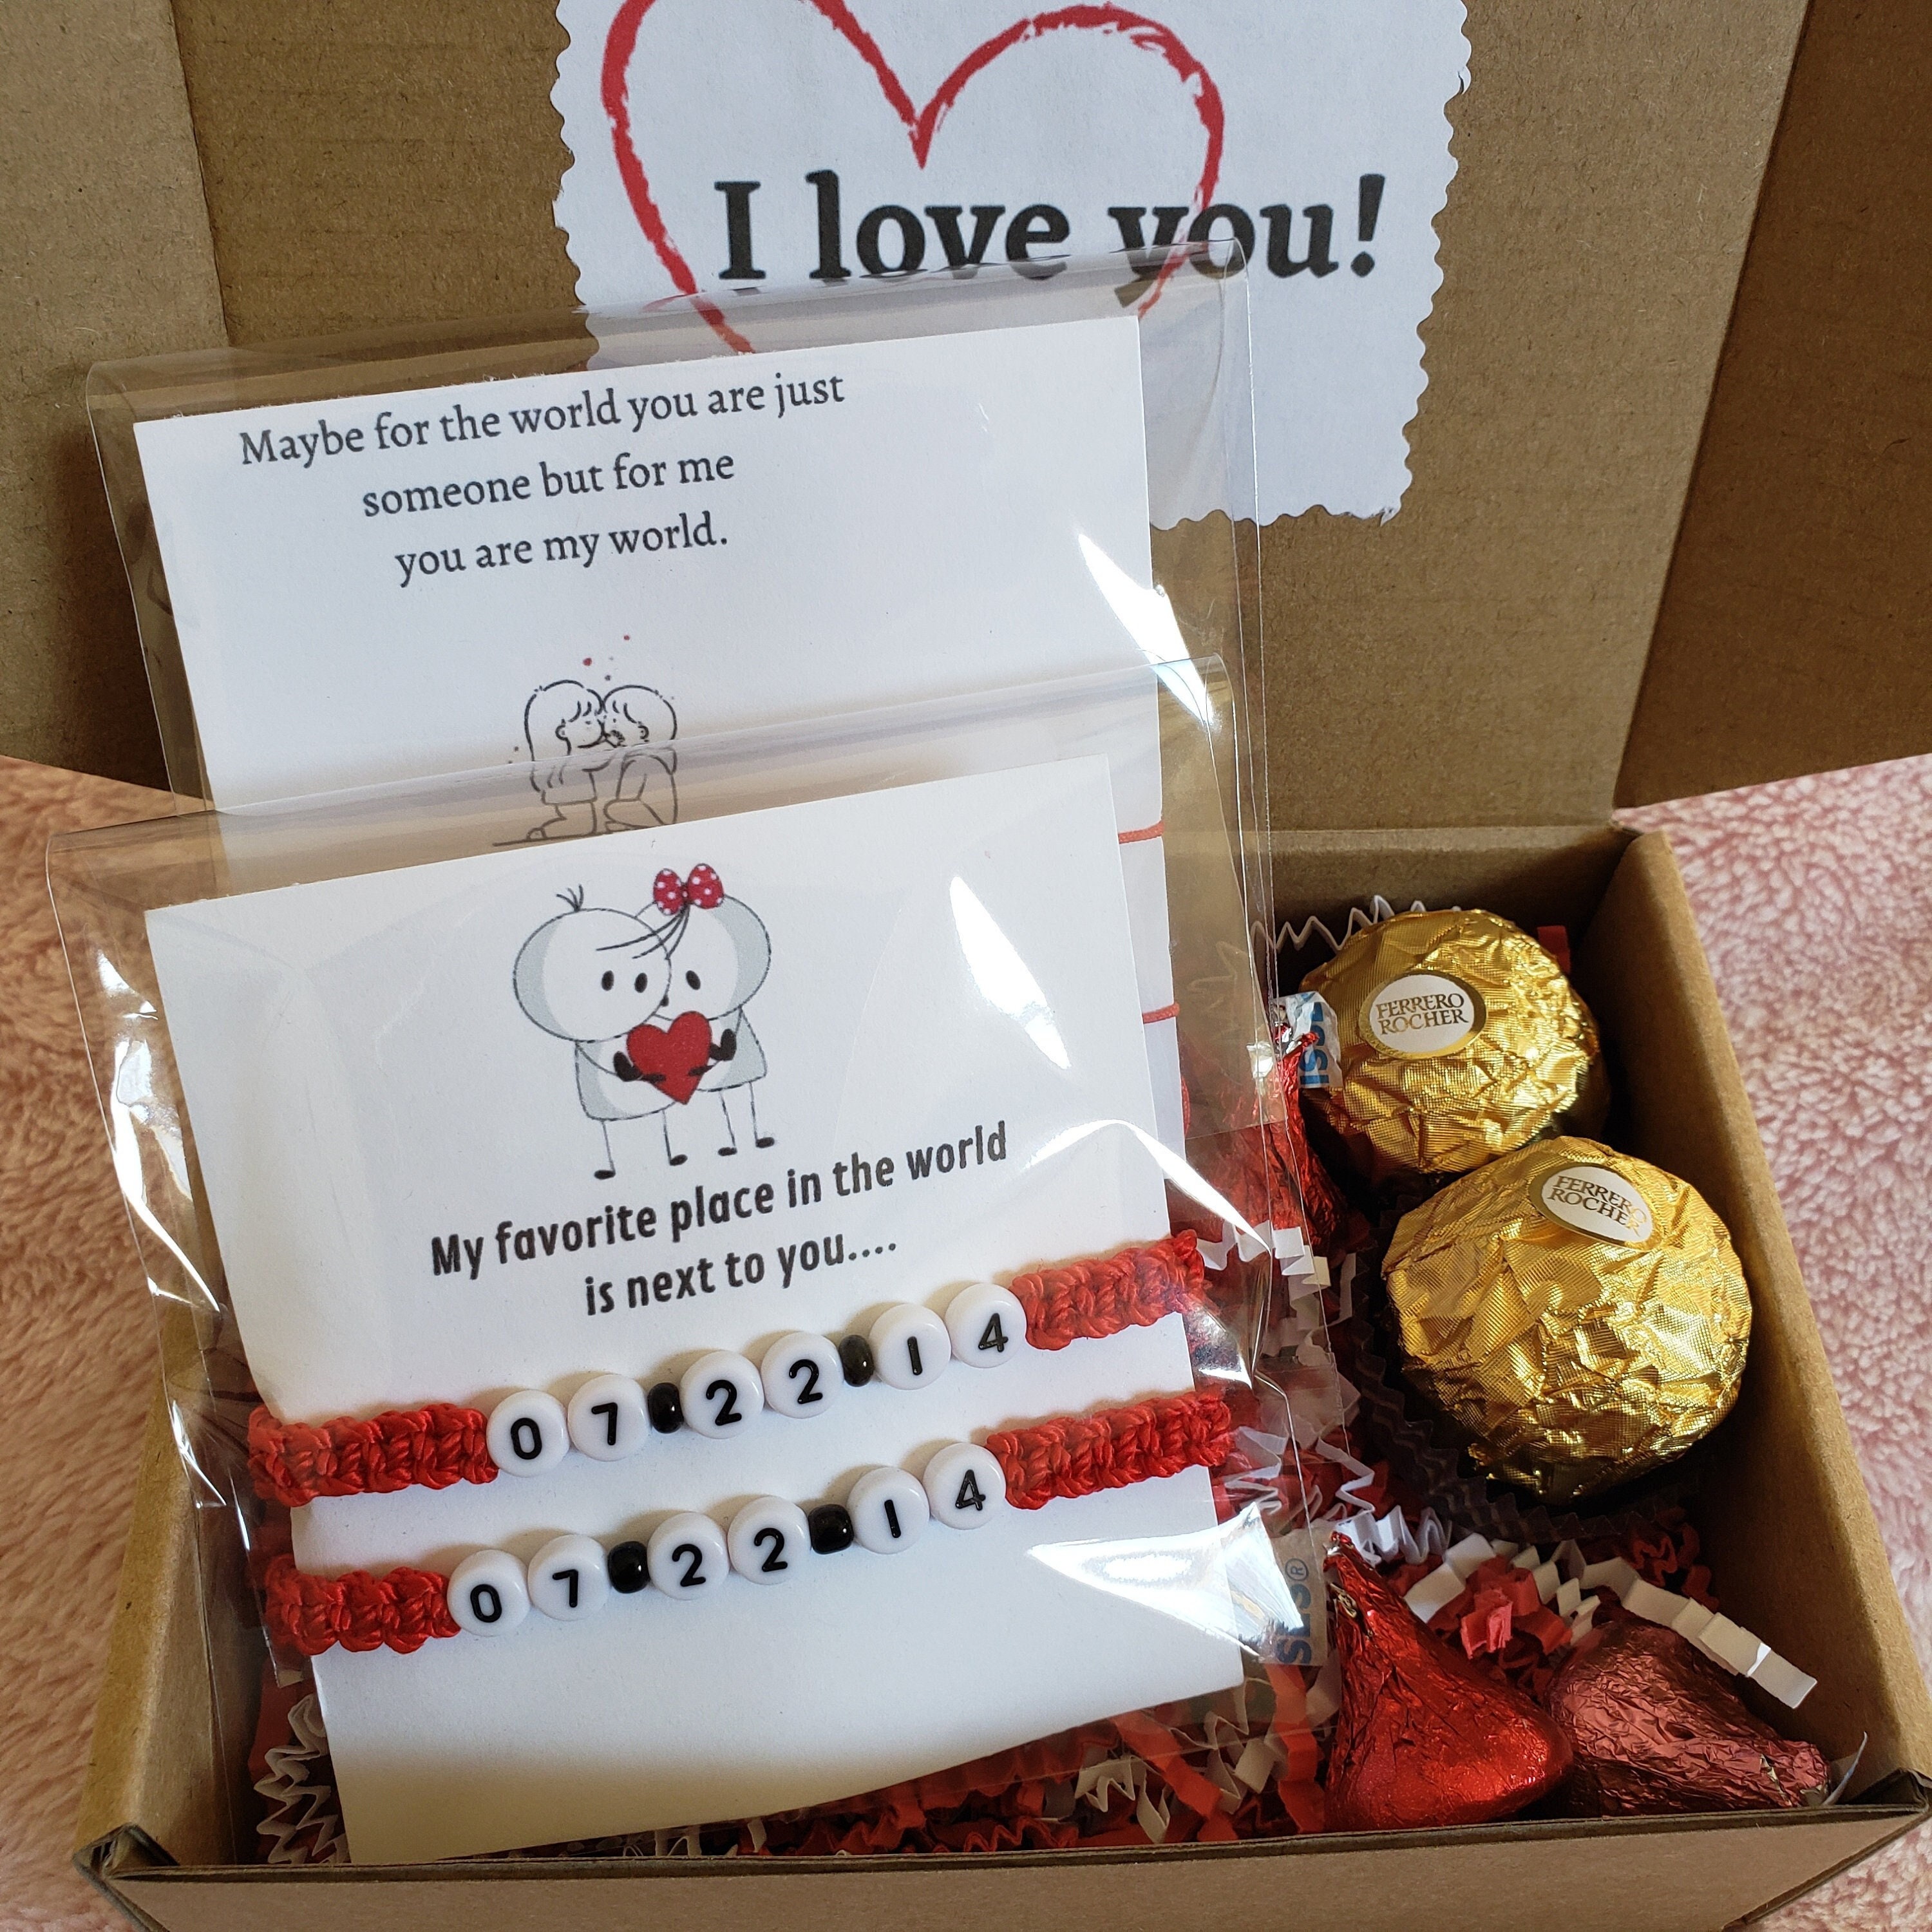 Caja sorpresa de chocolates 😋🍫🍬 @prueba13647 💖#regalo #caja #sorpr